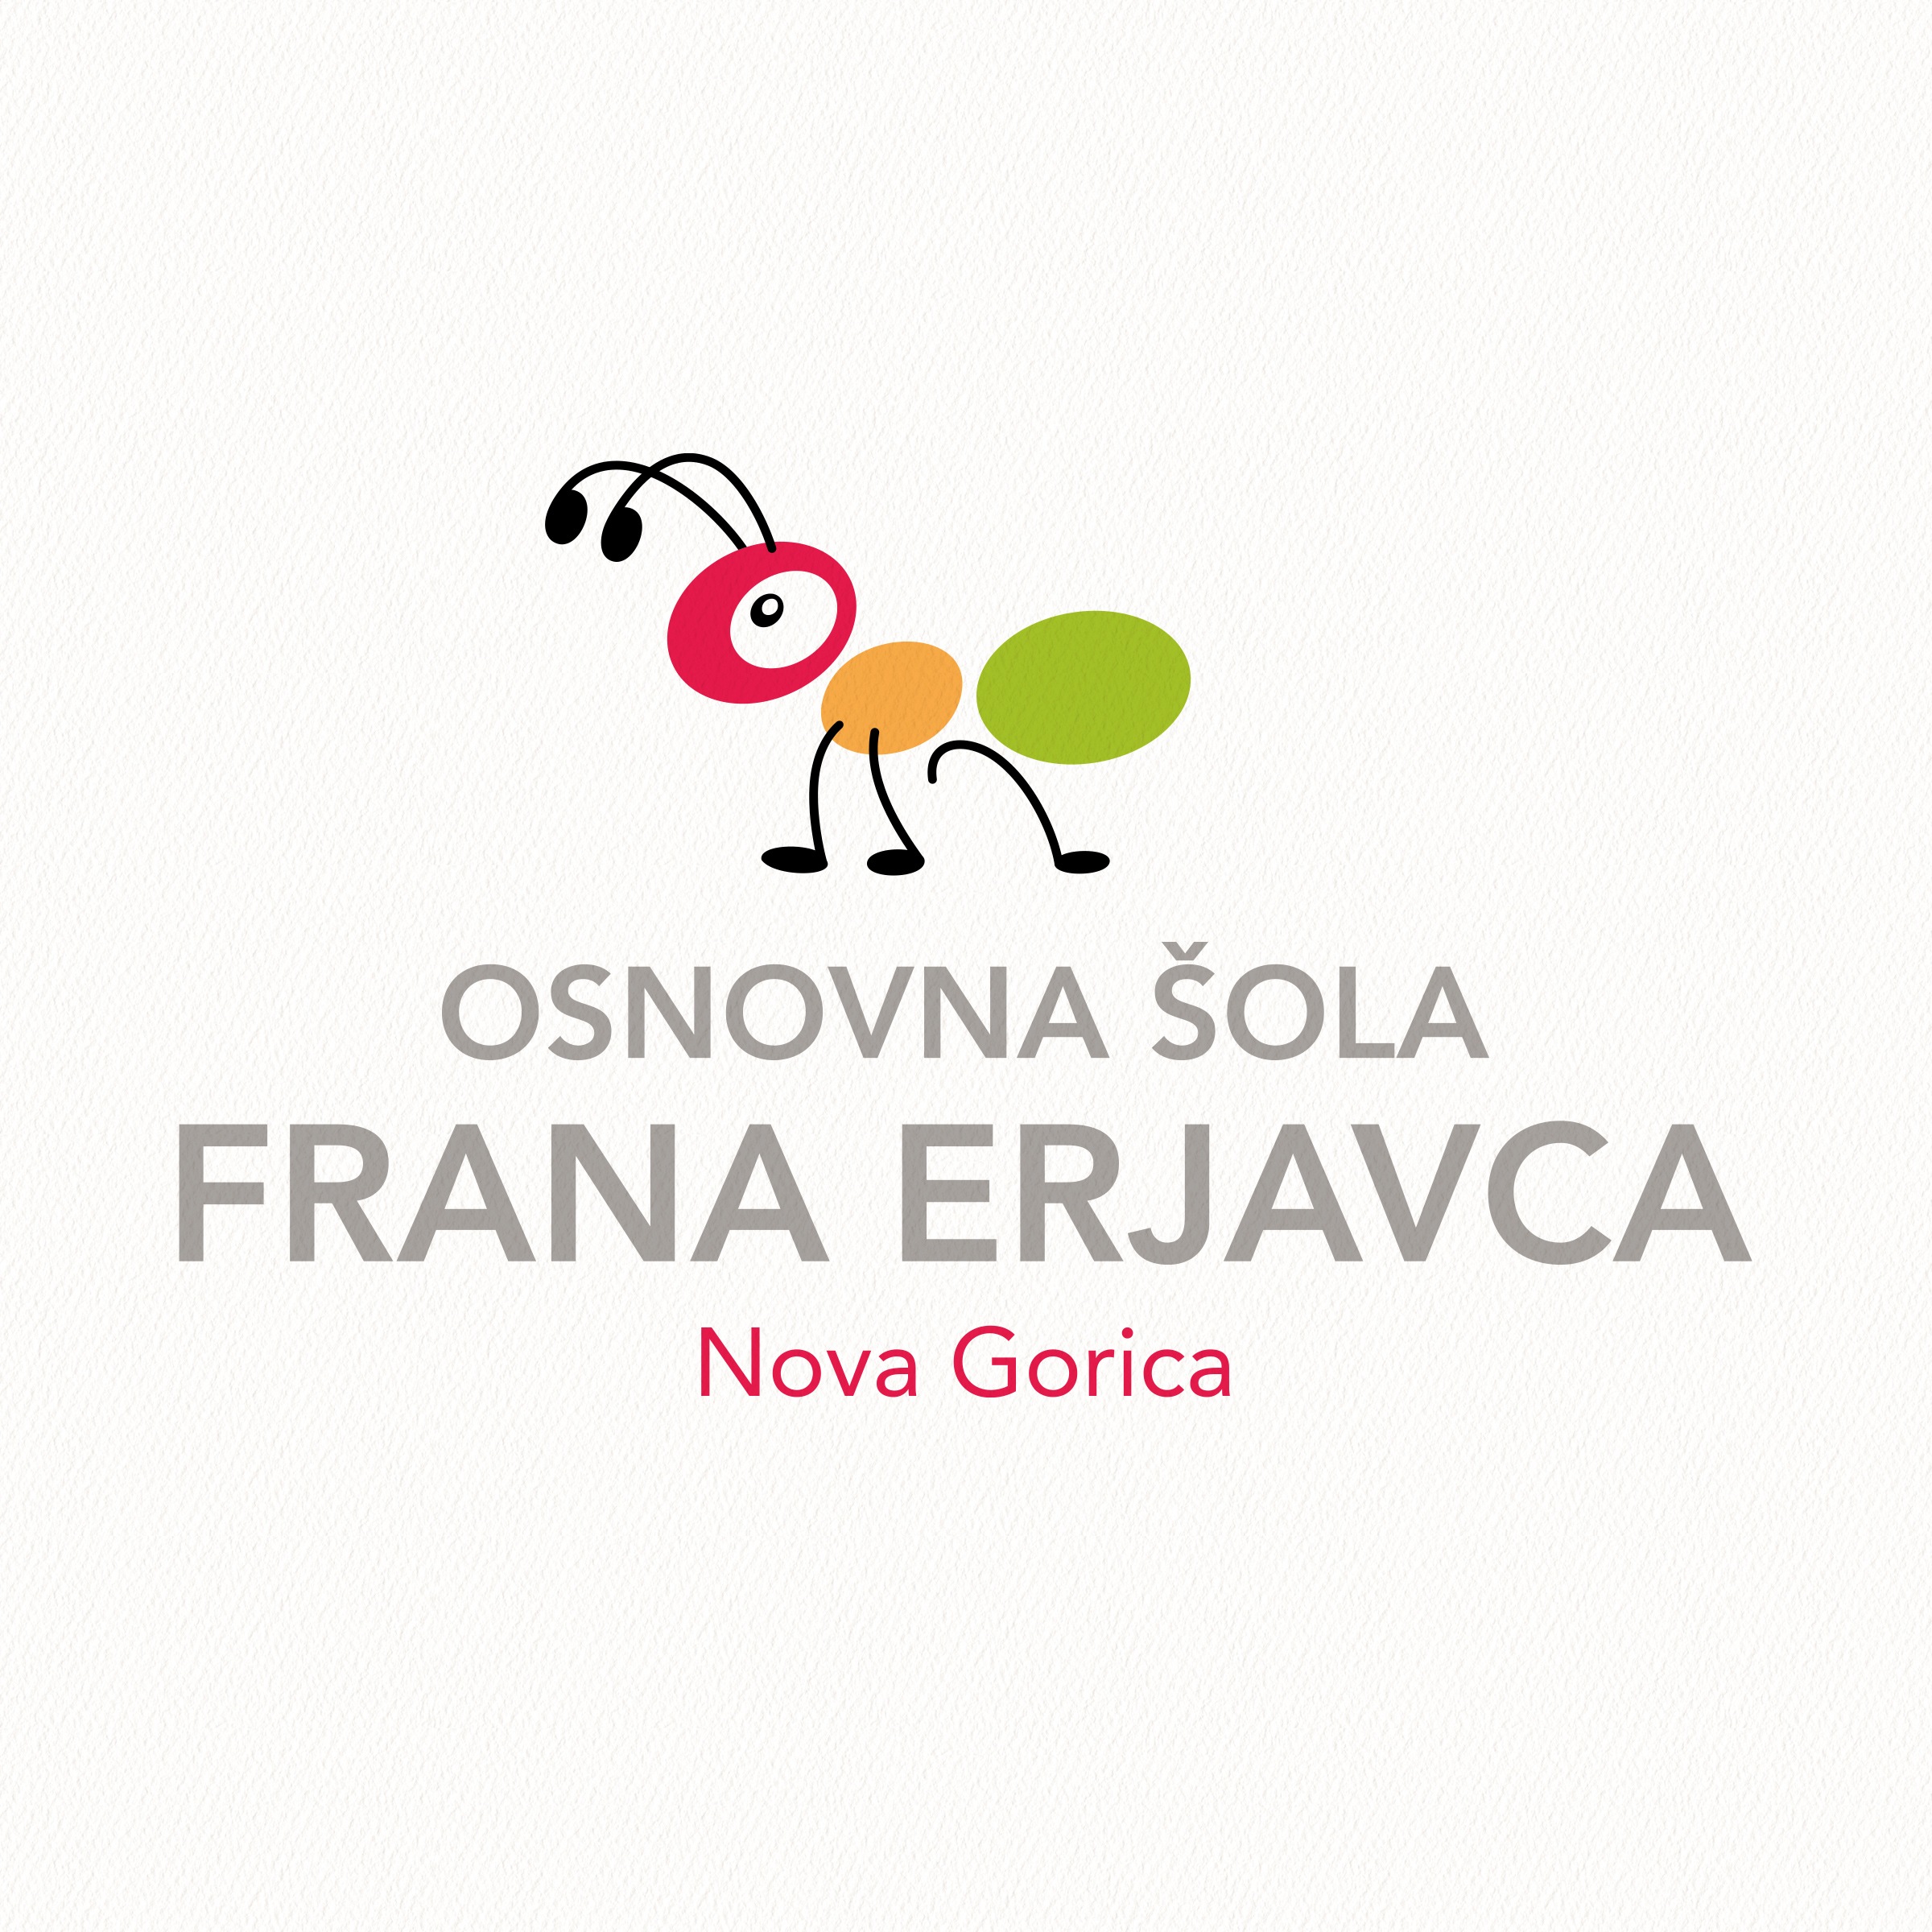 OŠ Frana Erjavca Nova Gorica